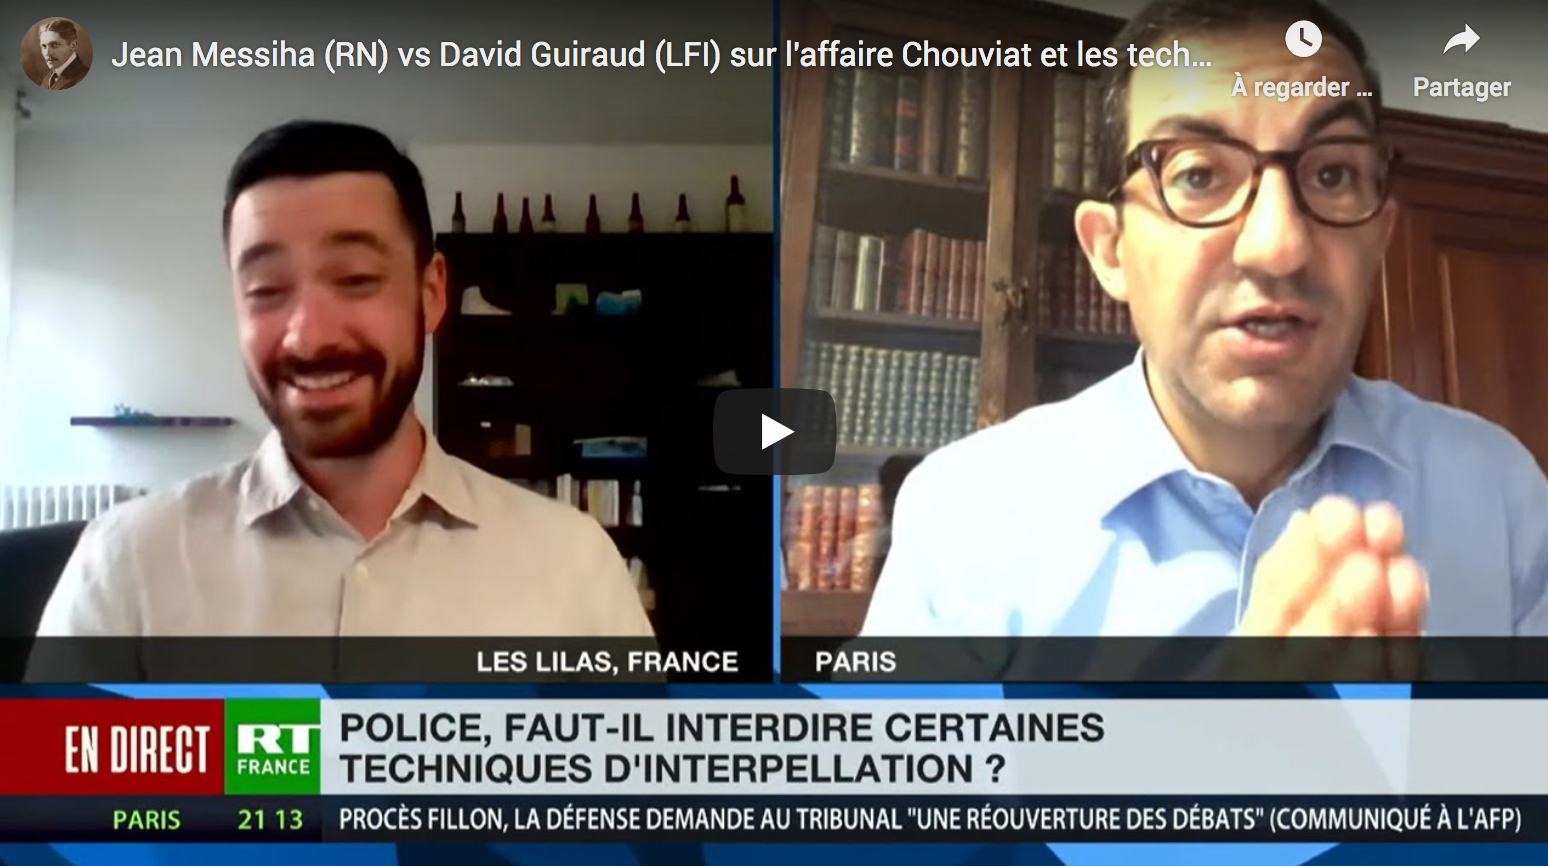 Jean Messiha (RN) VS David Guiraud (LFI) sur l’affaire Chouviat et les techniques d’interpellation (VIDÉO)